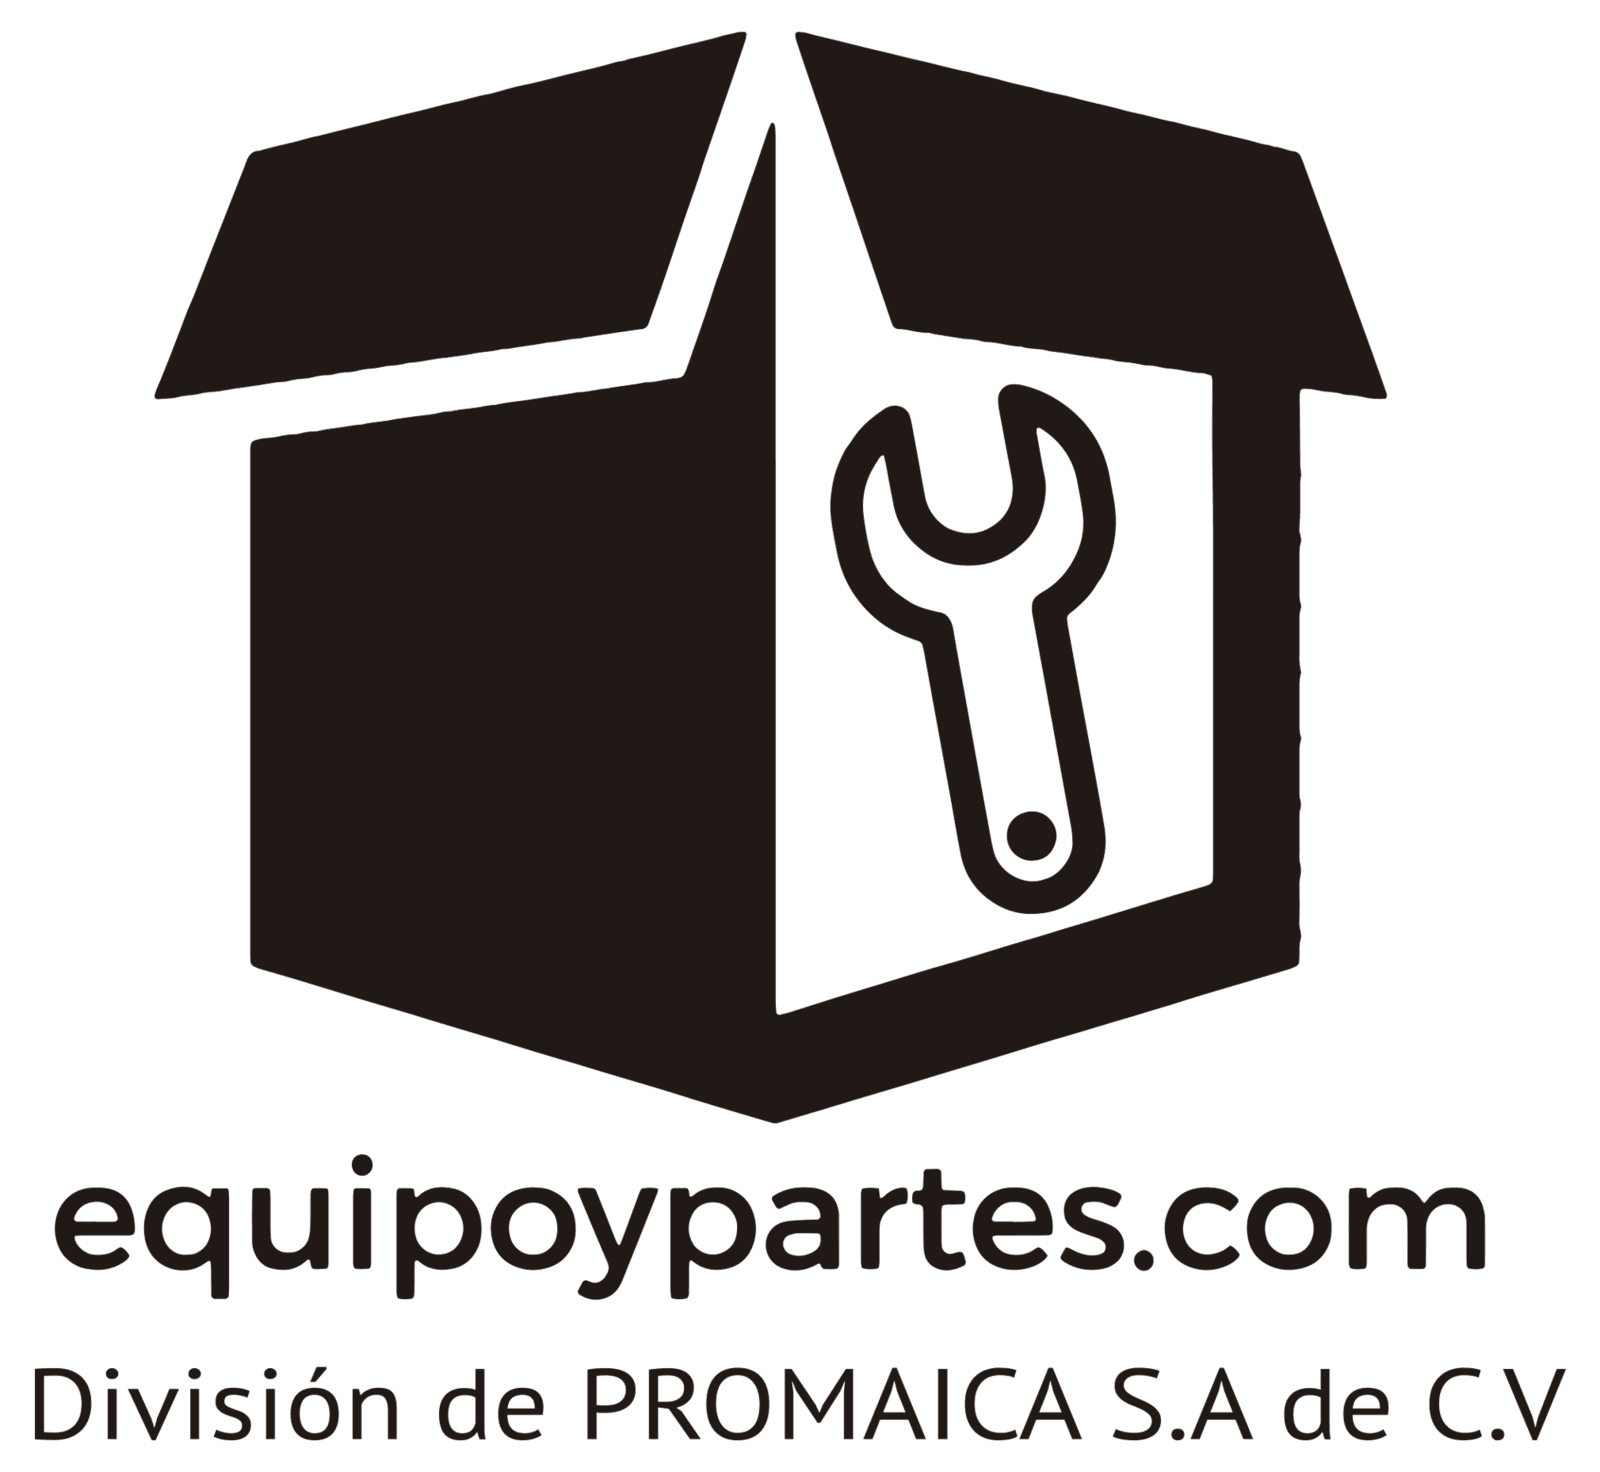 Ecommerce EquipoyPartes